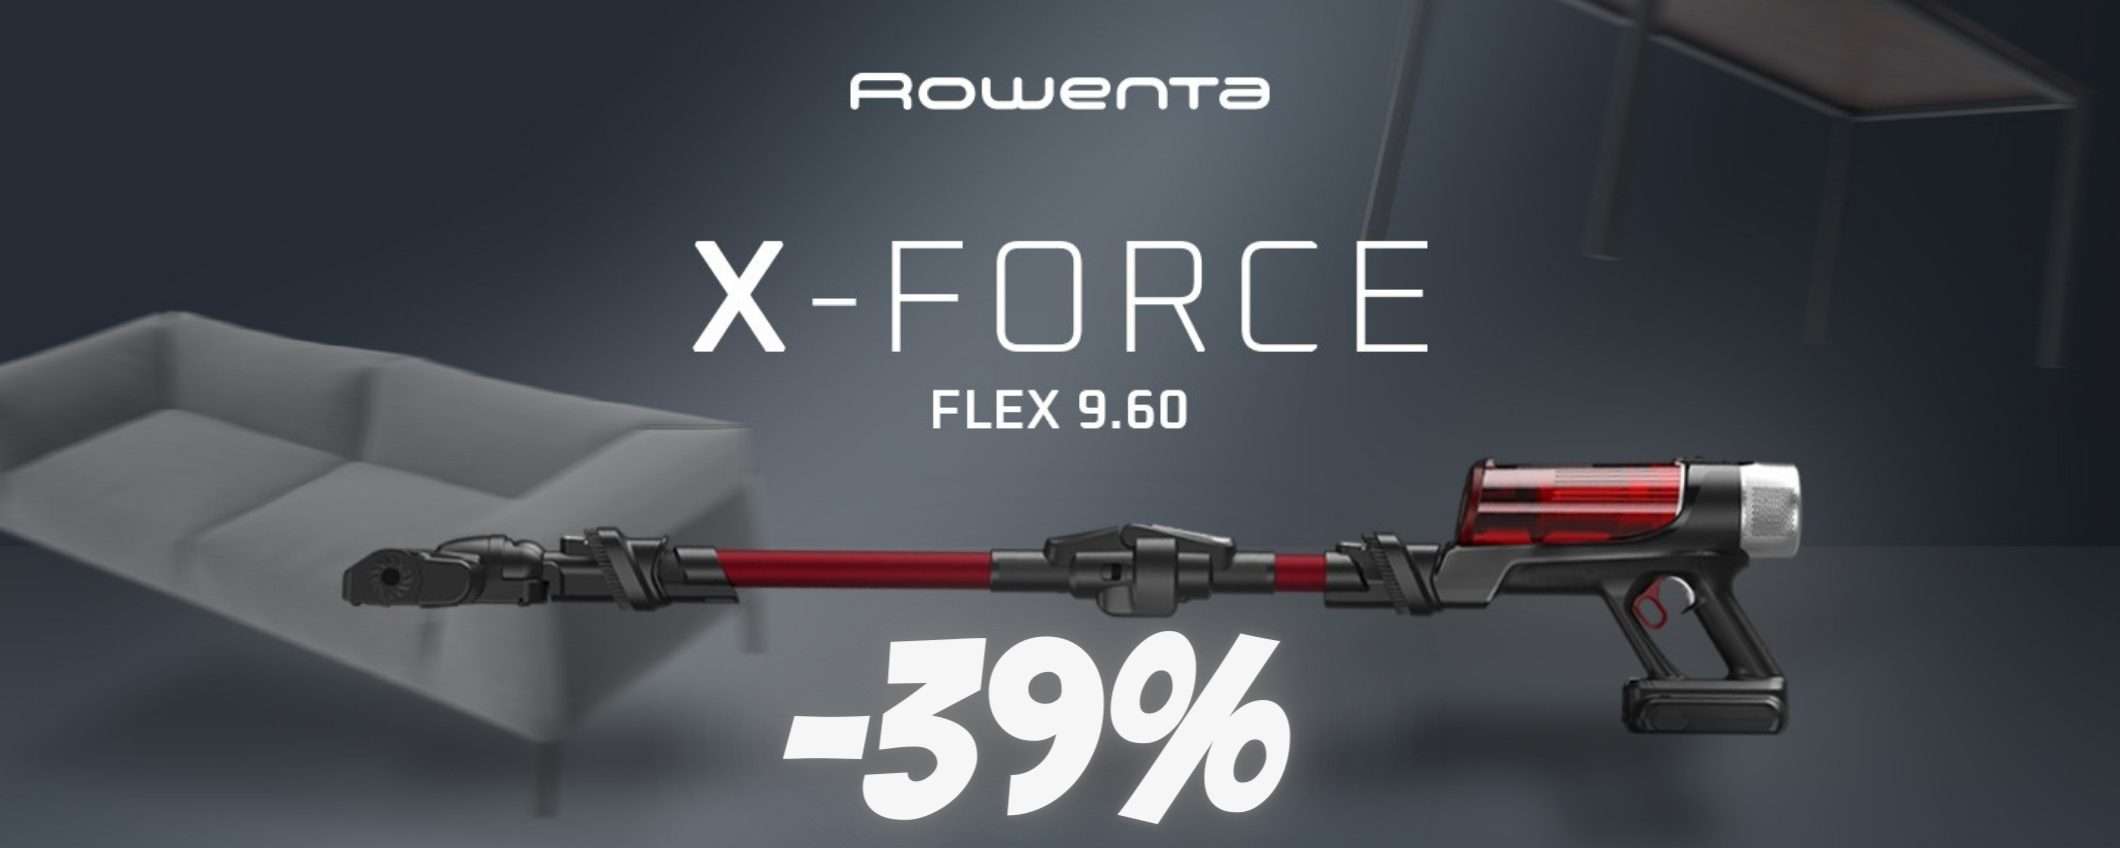 Rowenta X-Force 960 torna al MINIMO STORICO su Amazon (-39%)